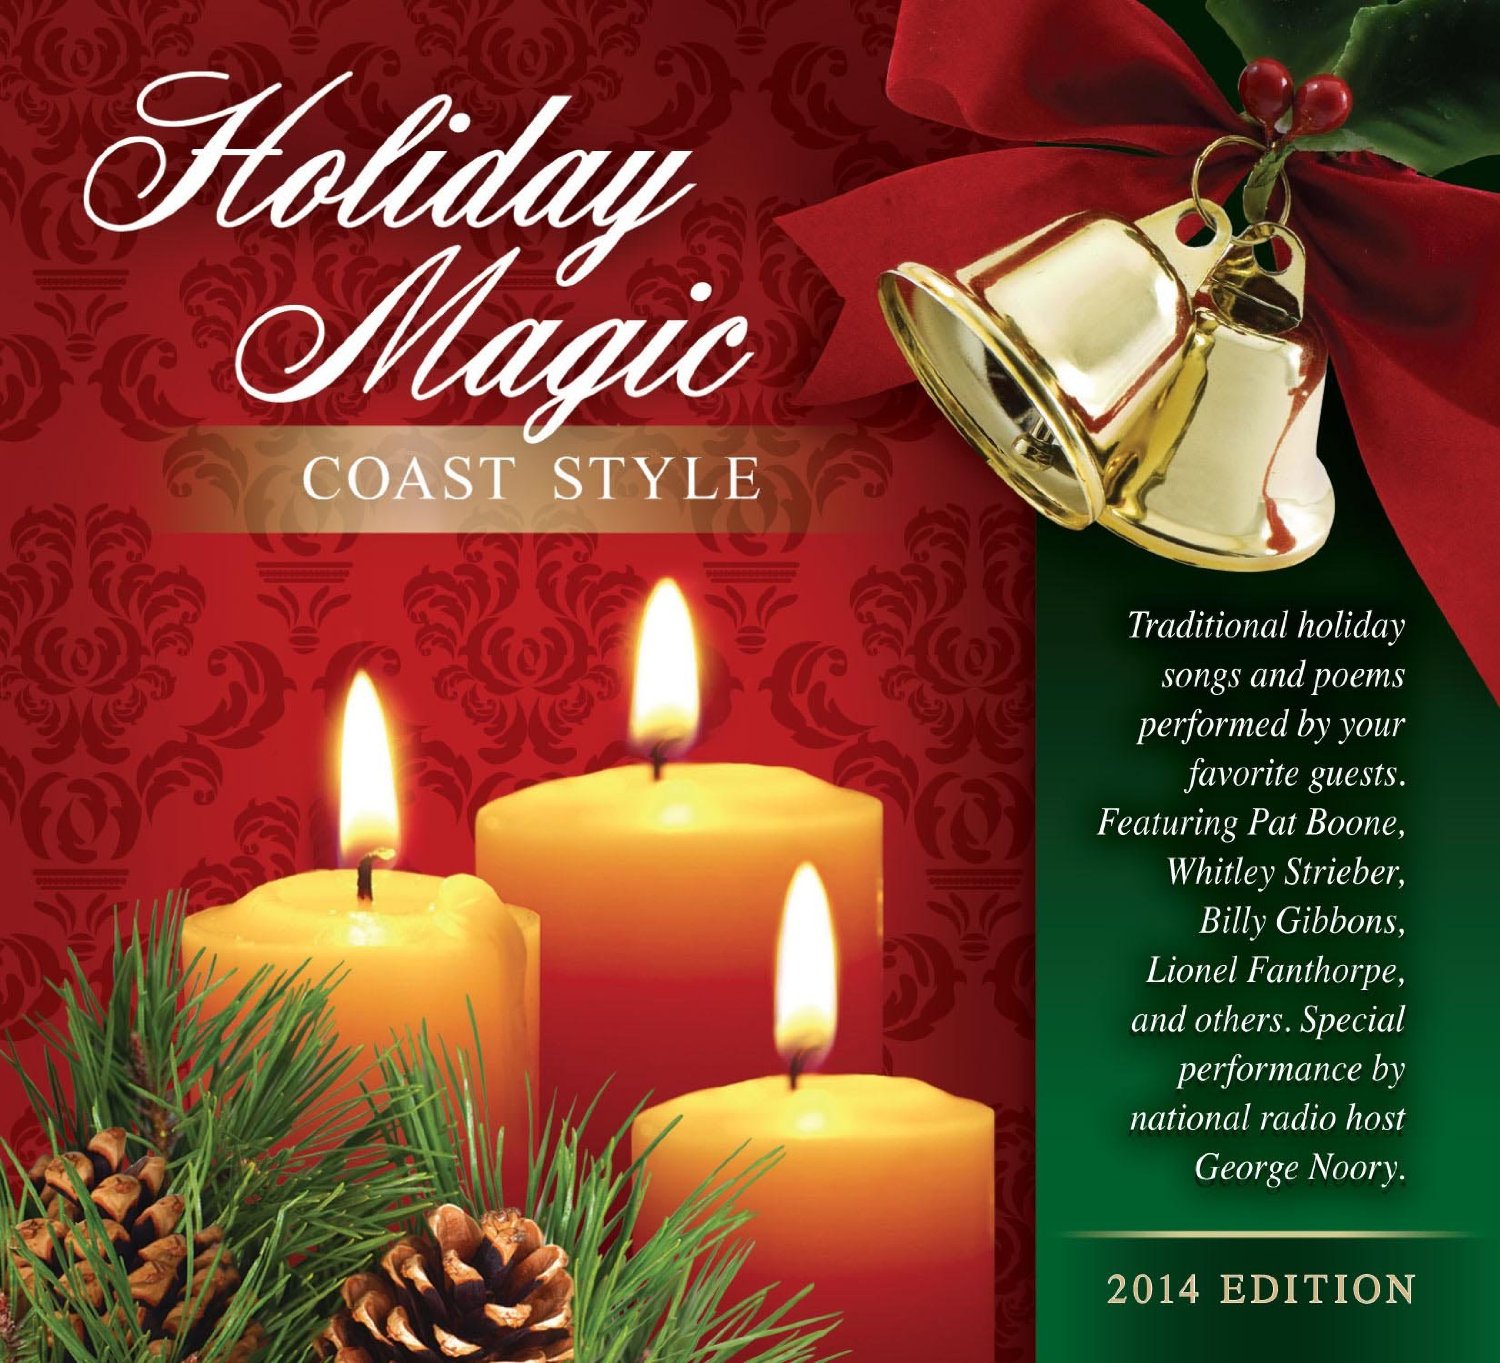 Holiday Magic Album Cover.jpg